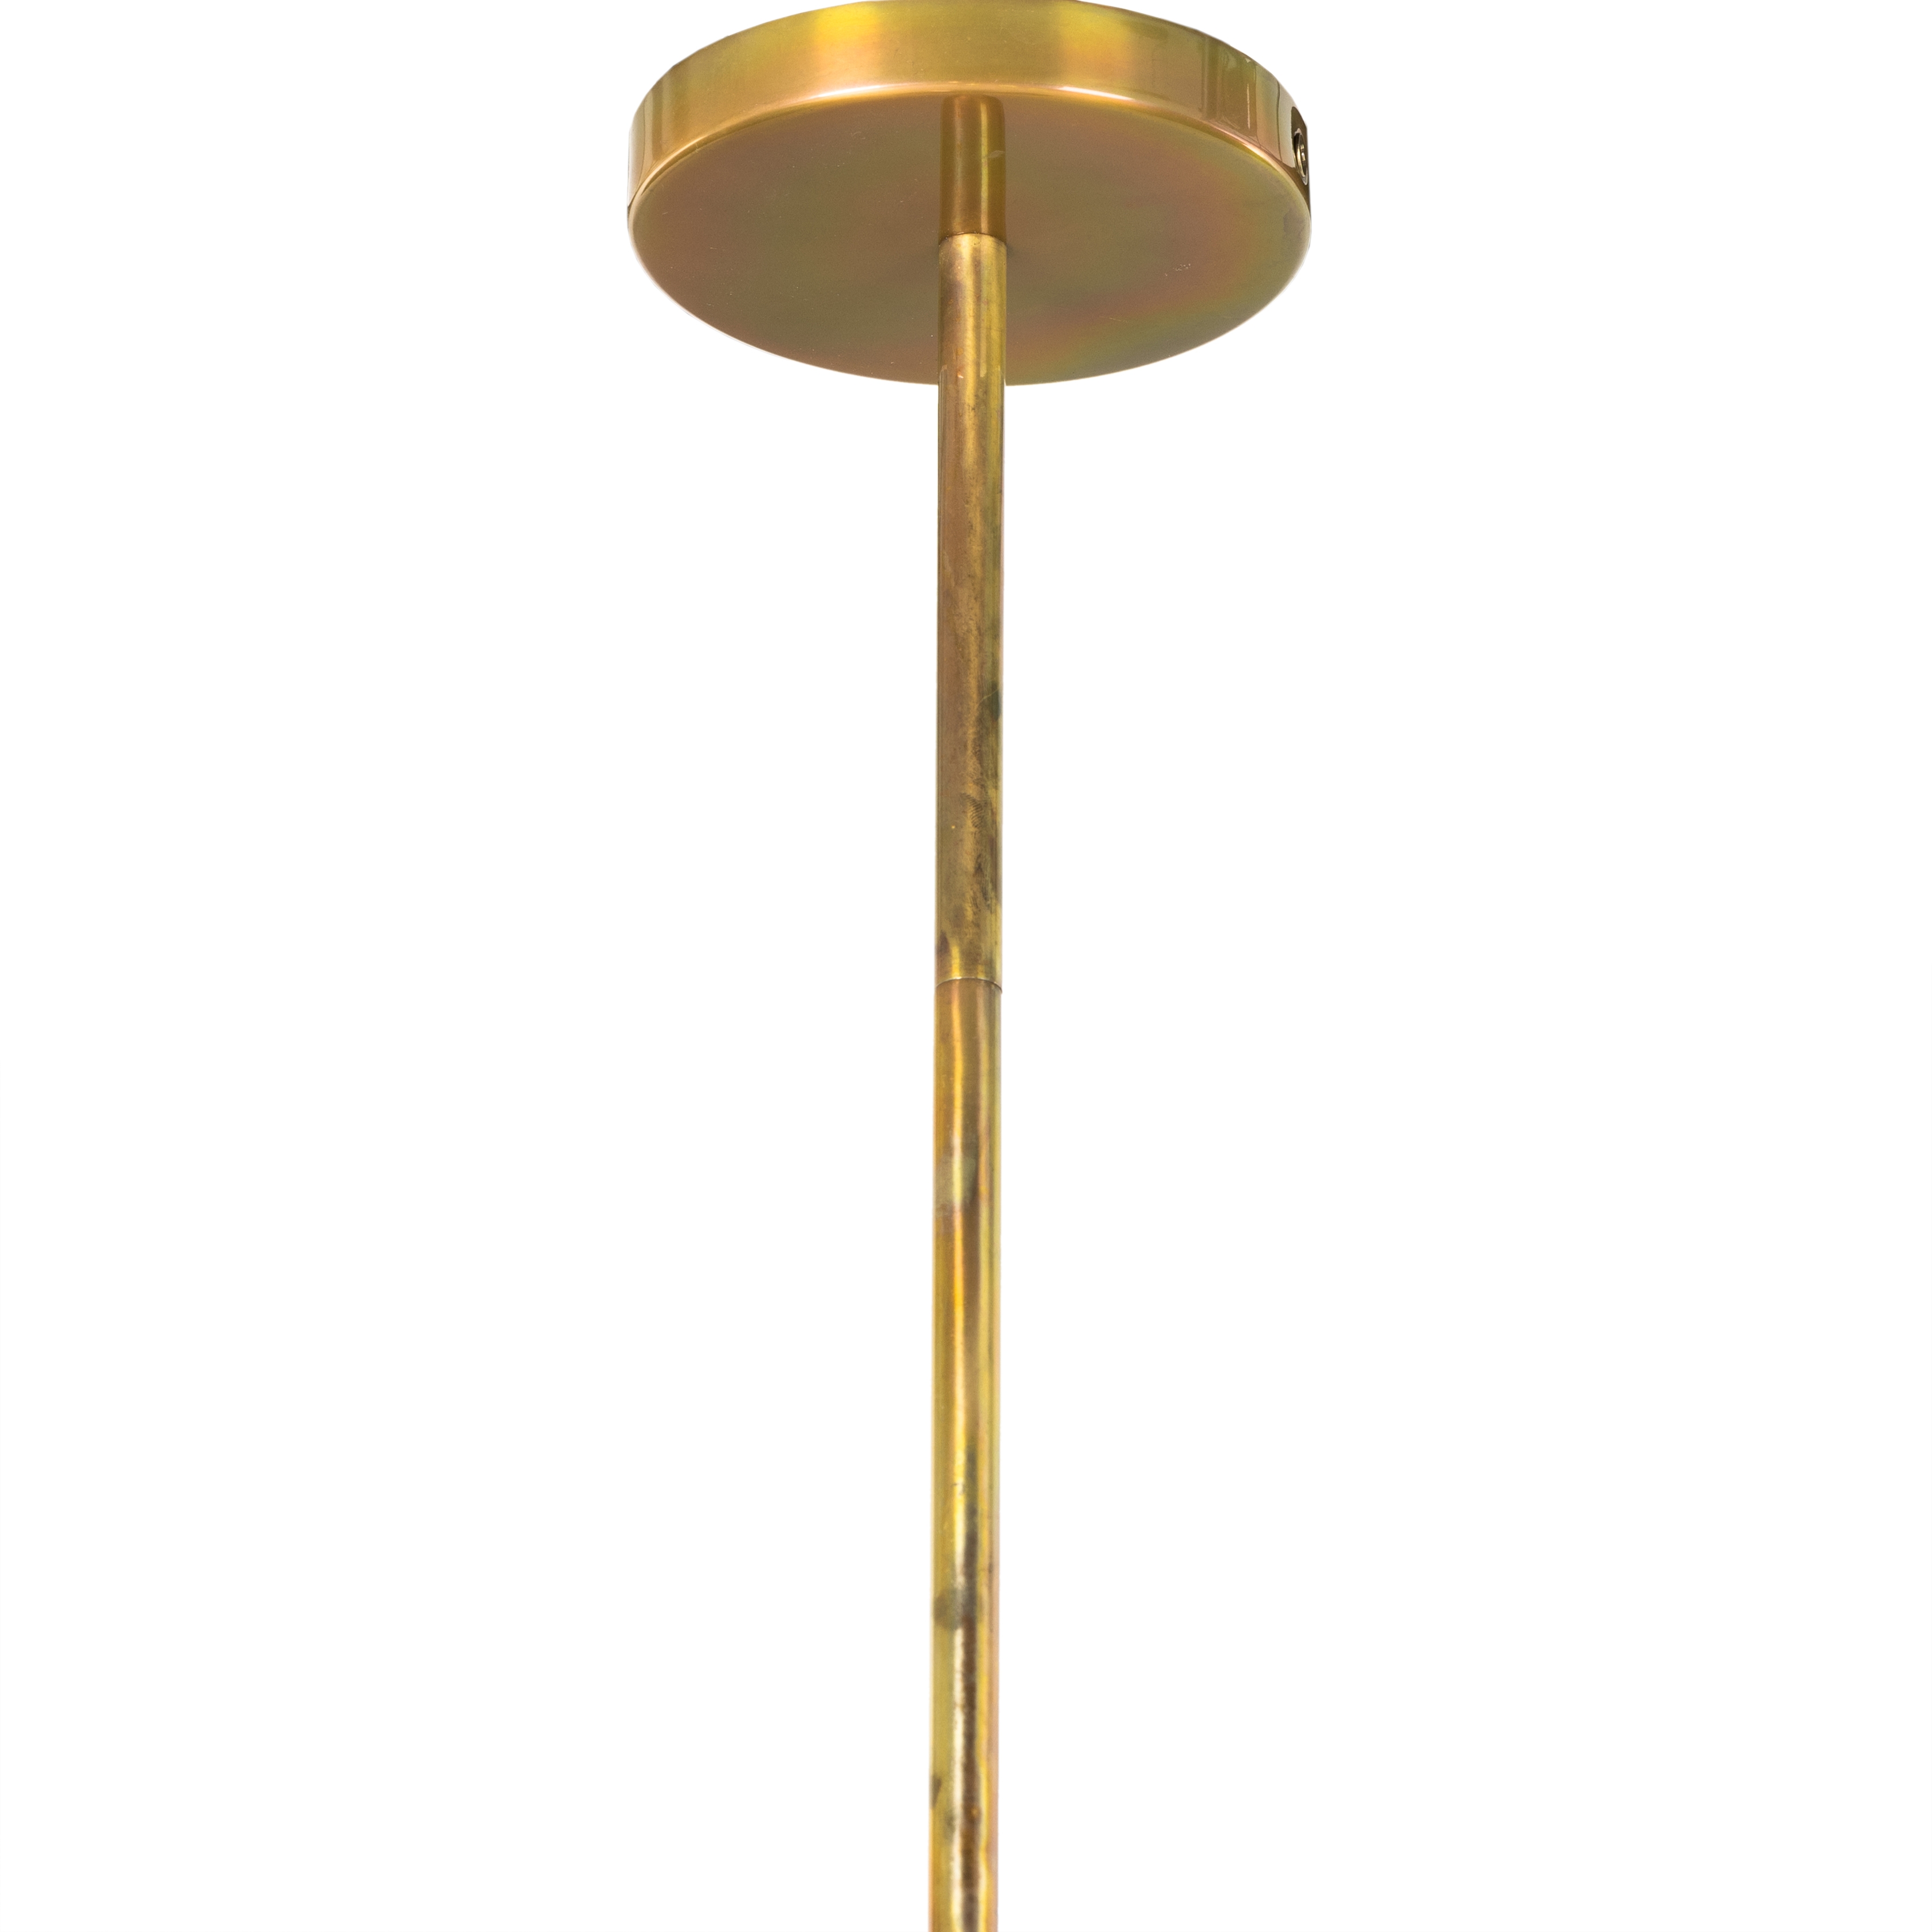 Clement Large Pendant-Burnt Brass - Image 5